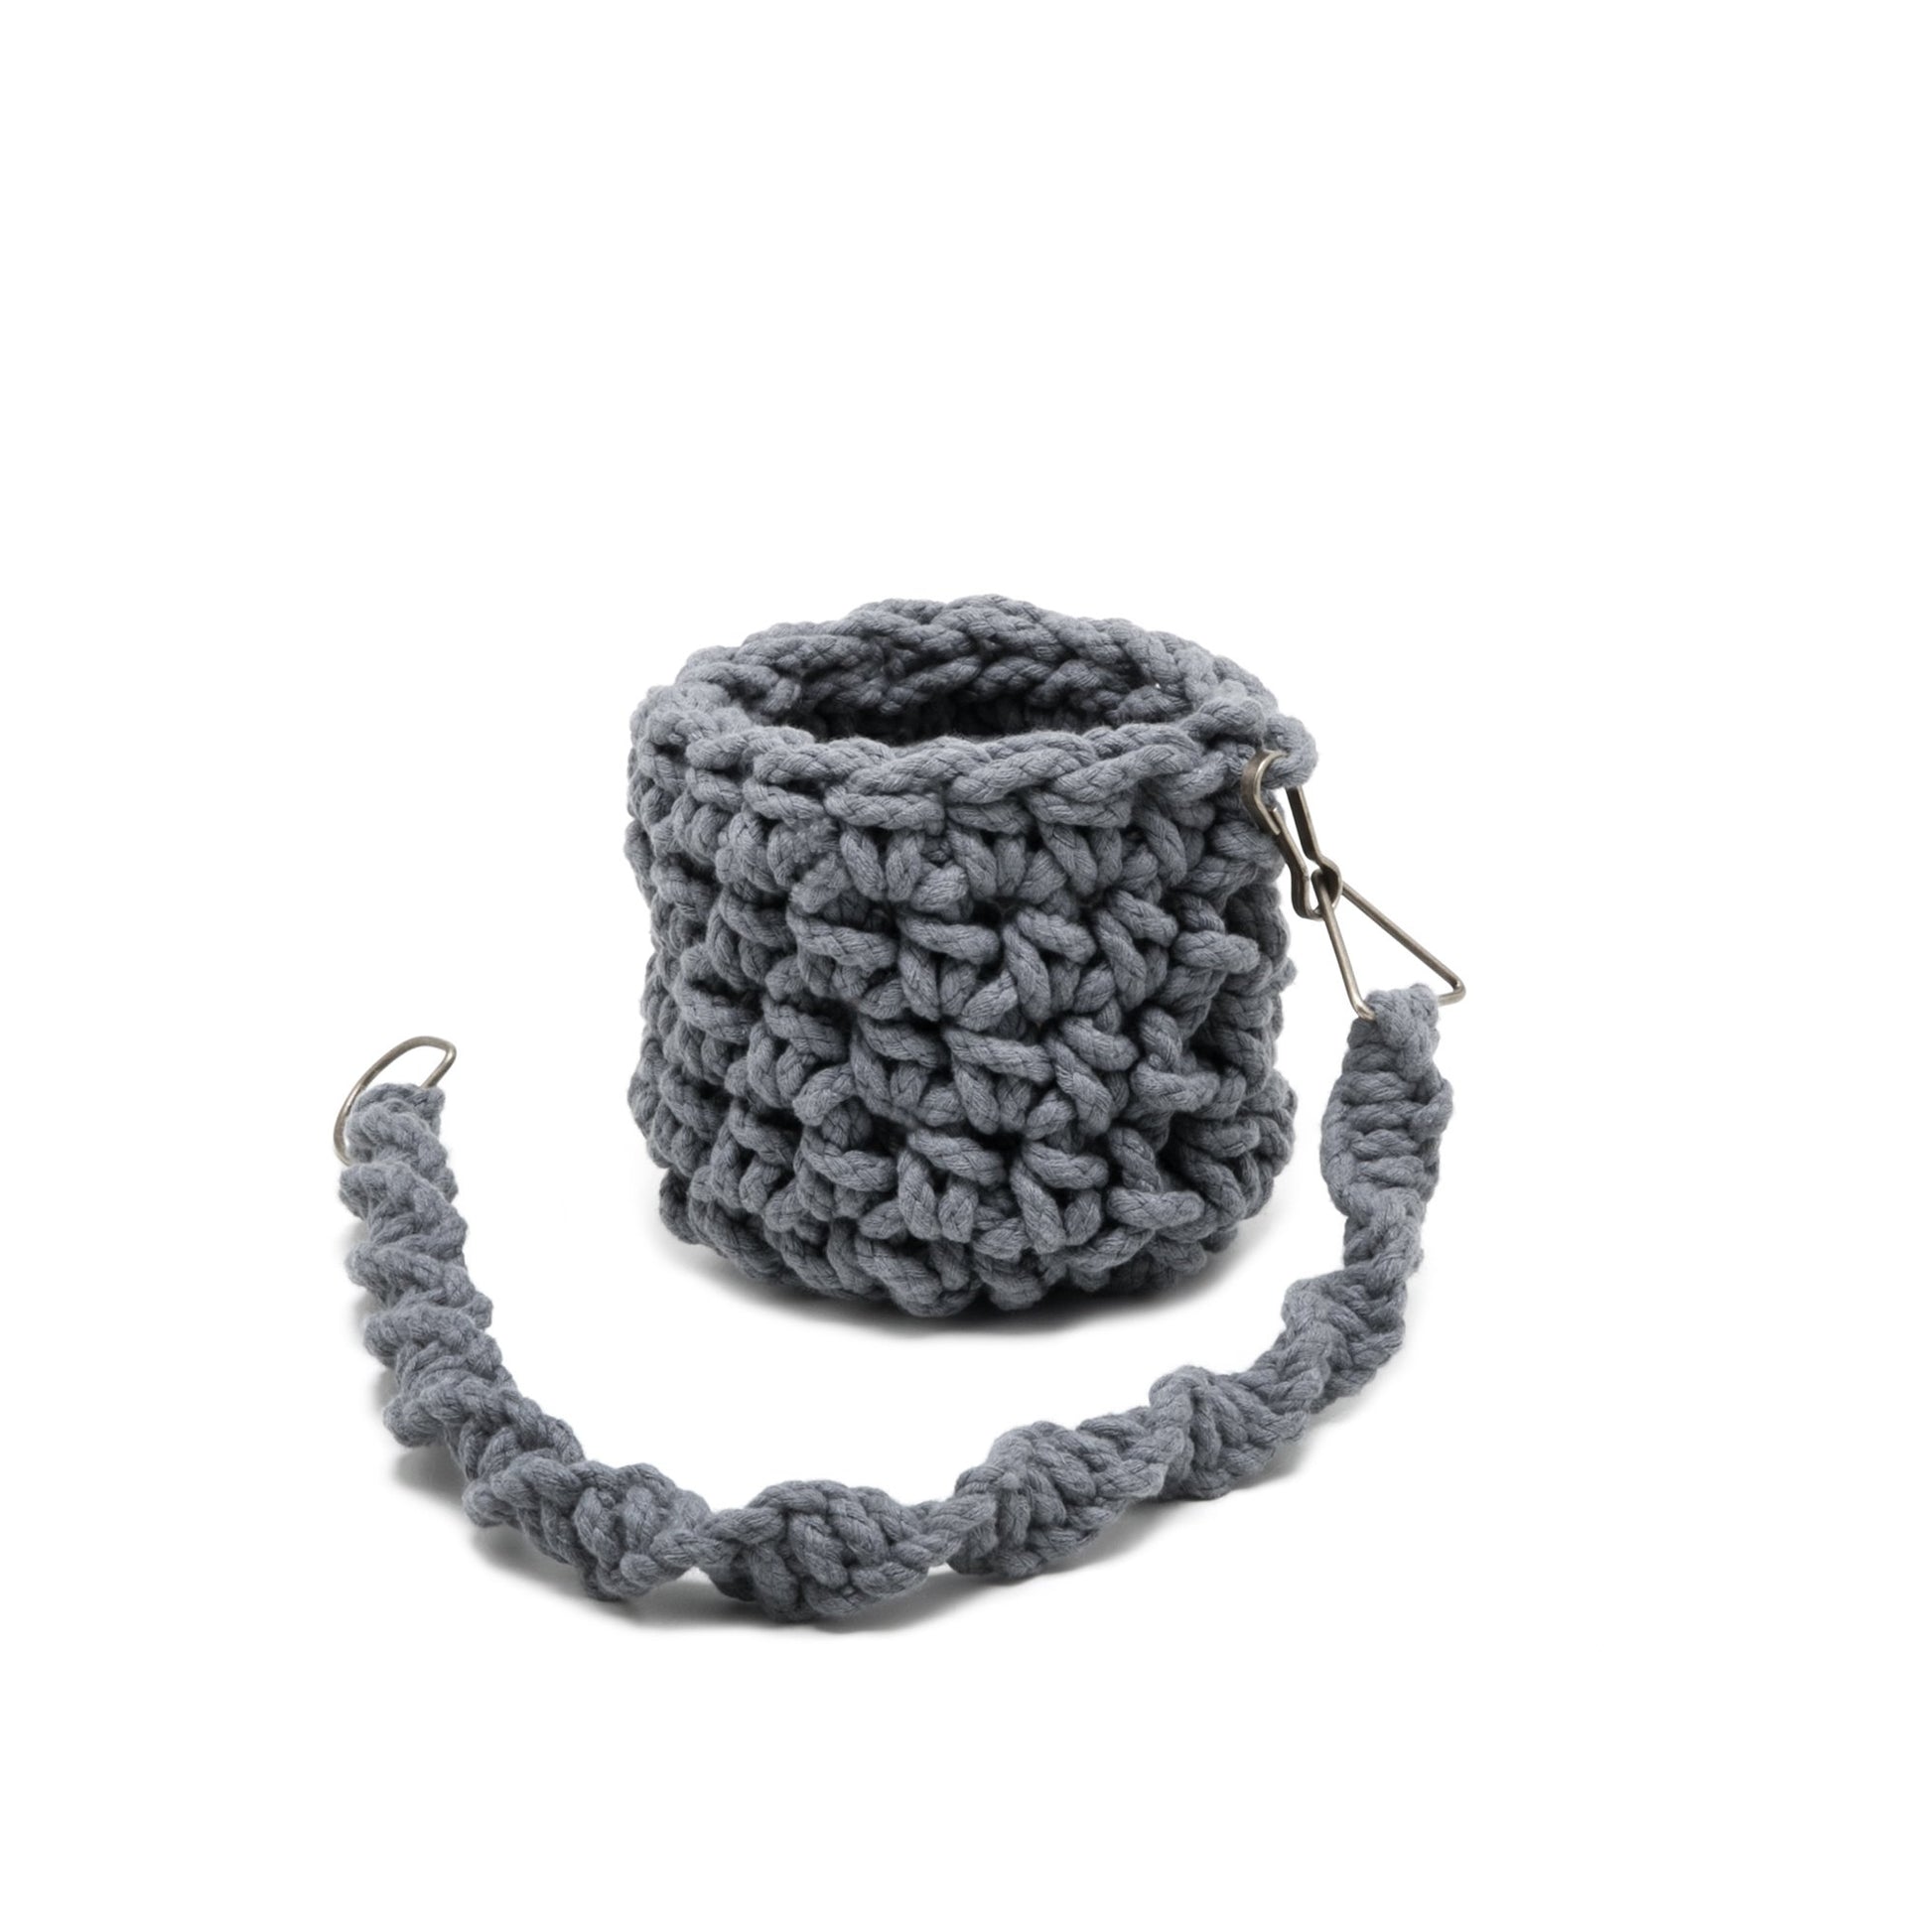 Cachepot String Suspenso em crochê artesanal e macramê 15x12 Cinza Pronta Entrega